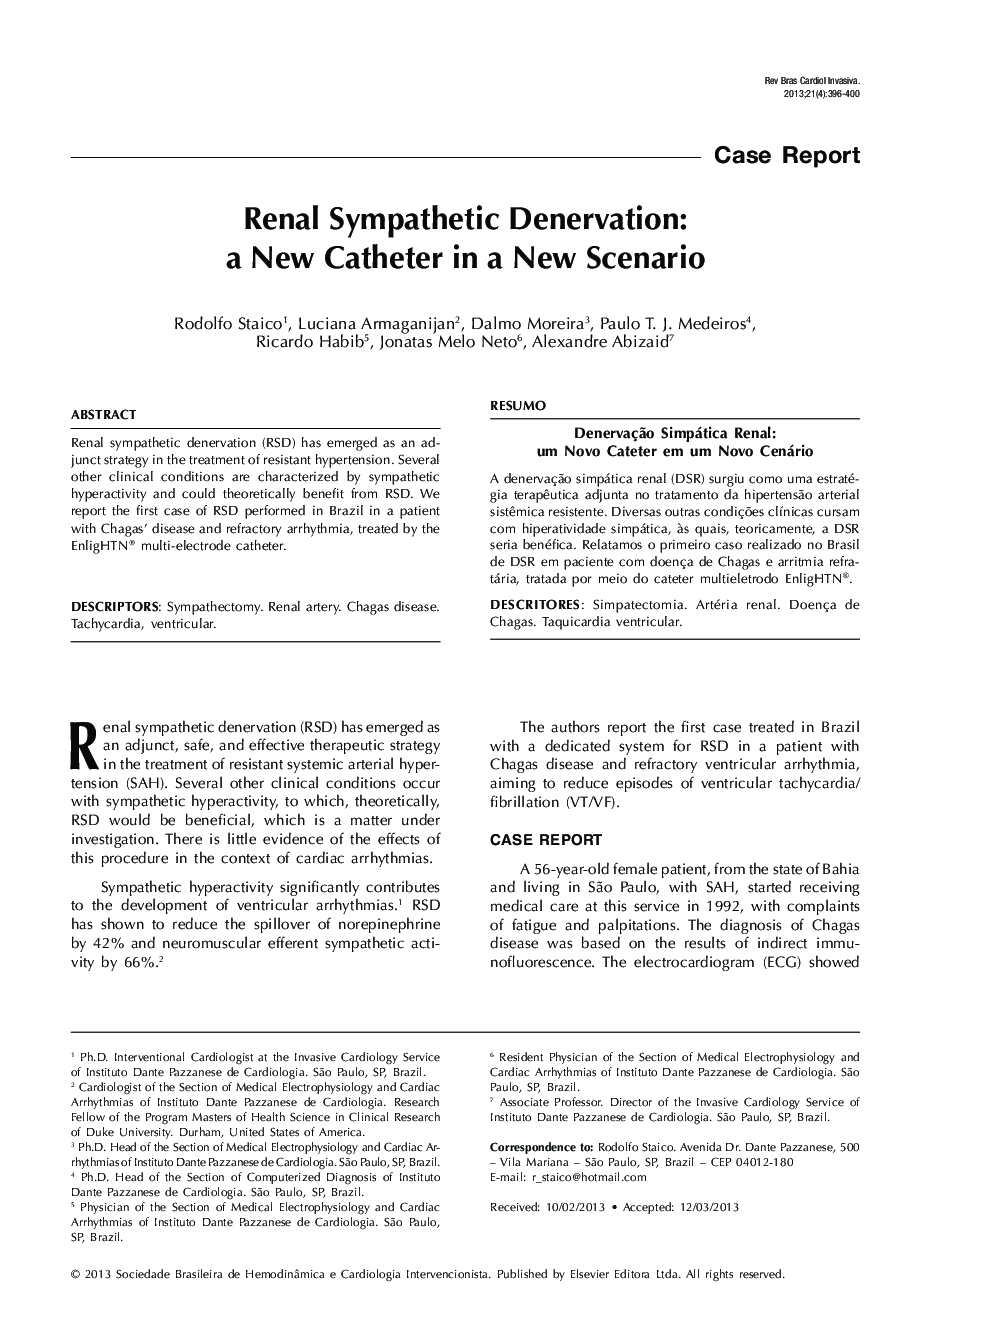 Renal Sympathetic Denervation: a New Catheter in a New Scenario